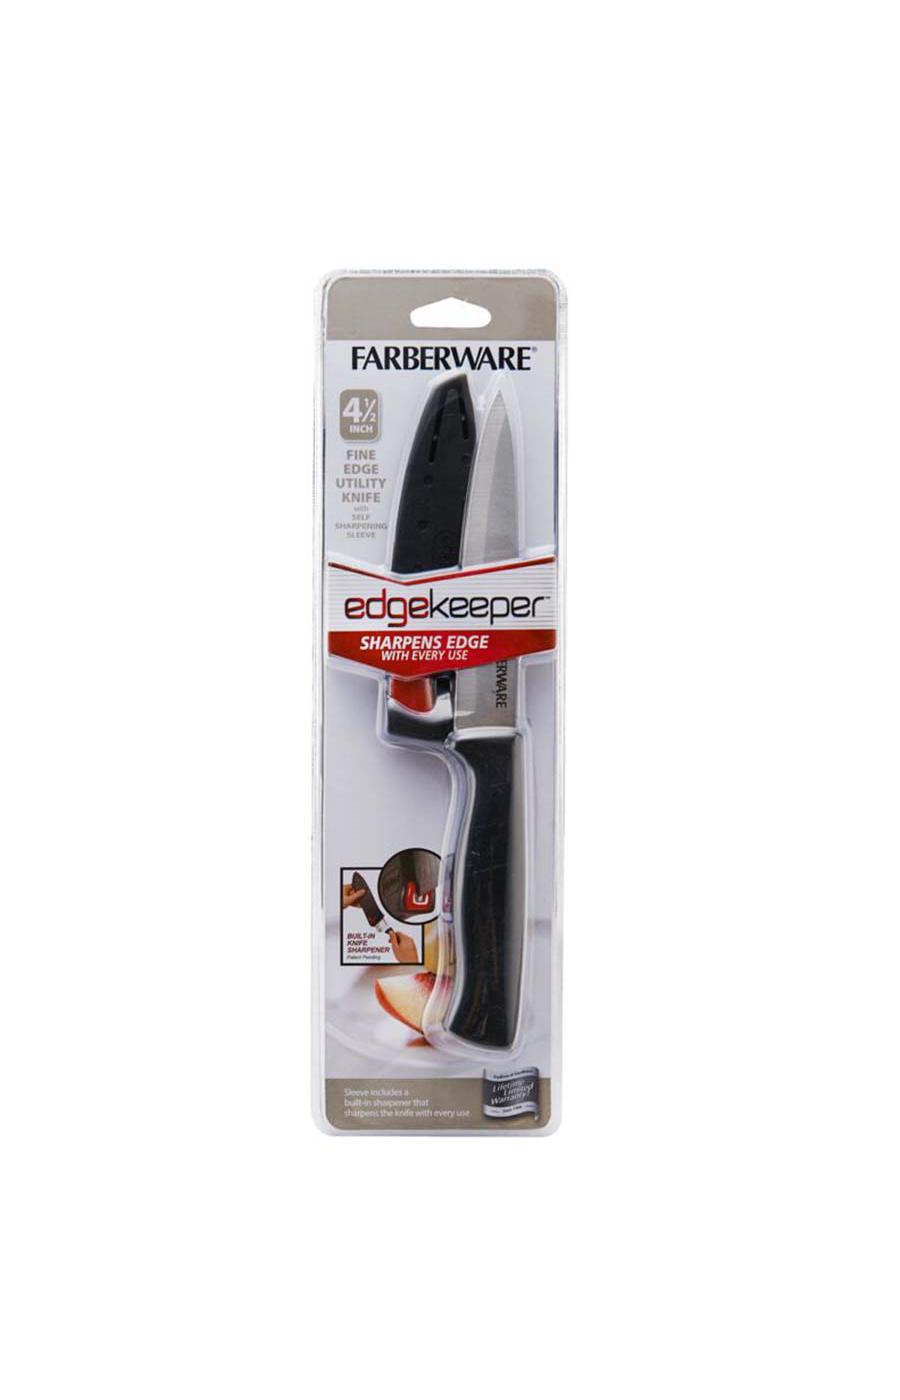 Always Keep Your Blade Sharpened with Farberware EdgeKeeper